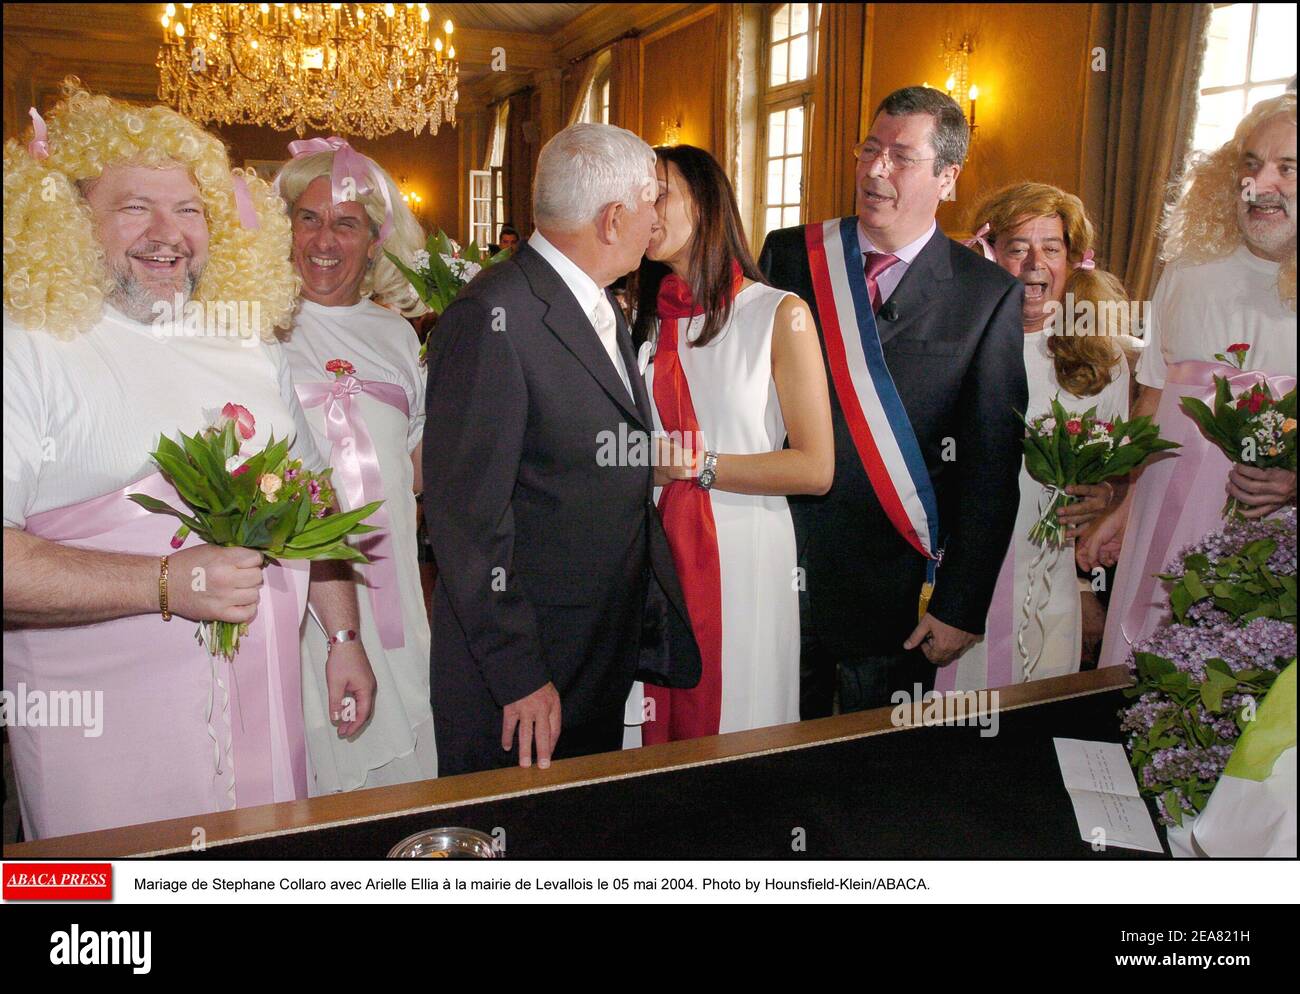 Mariage de Stephane Collaro avec Arielle Ellia ˆ la mairie de Levallois le 05 mai 2004. Photo by Hounsfield-Klein/ABACA. Stock Photo